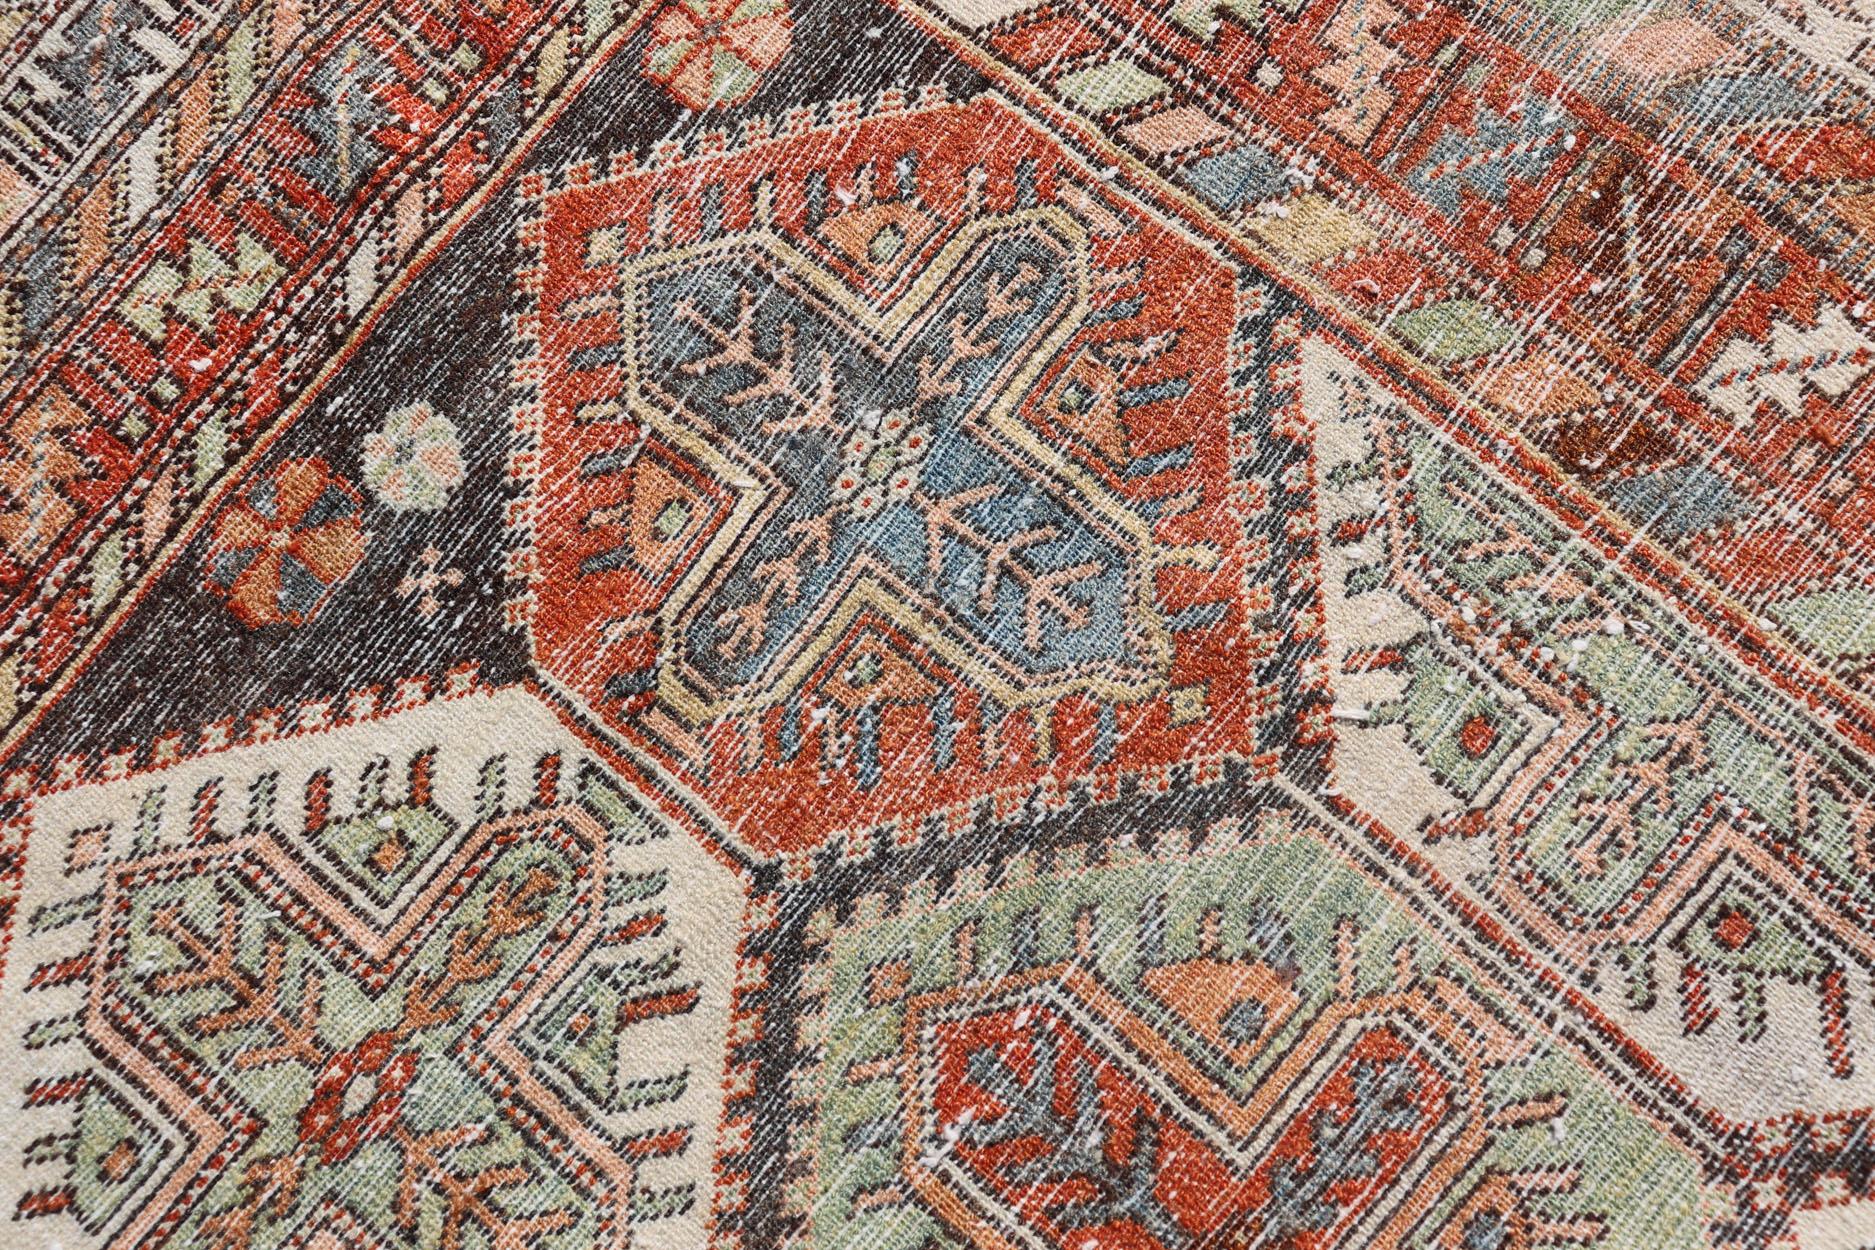 Antique Persian Tribal Motif Design with Crosses Bakhtiari Rug in Multi Colors For Sale 6